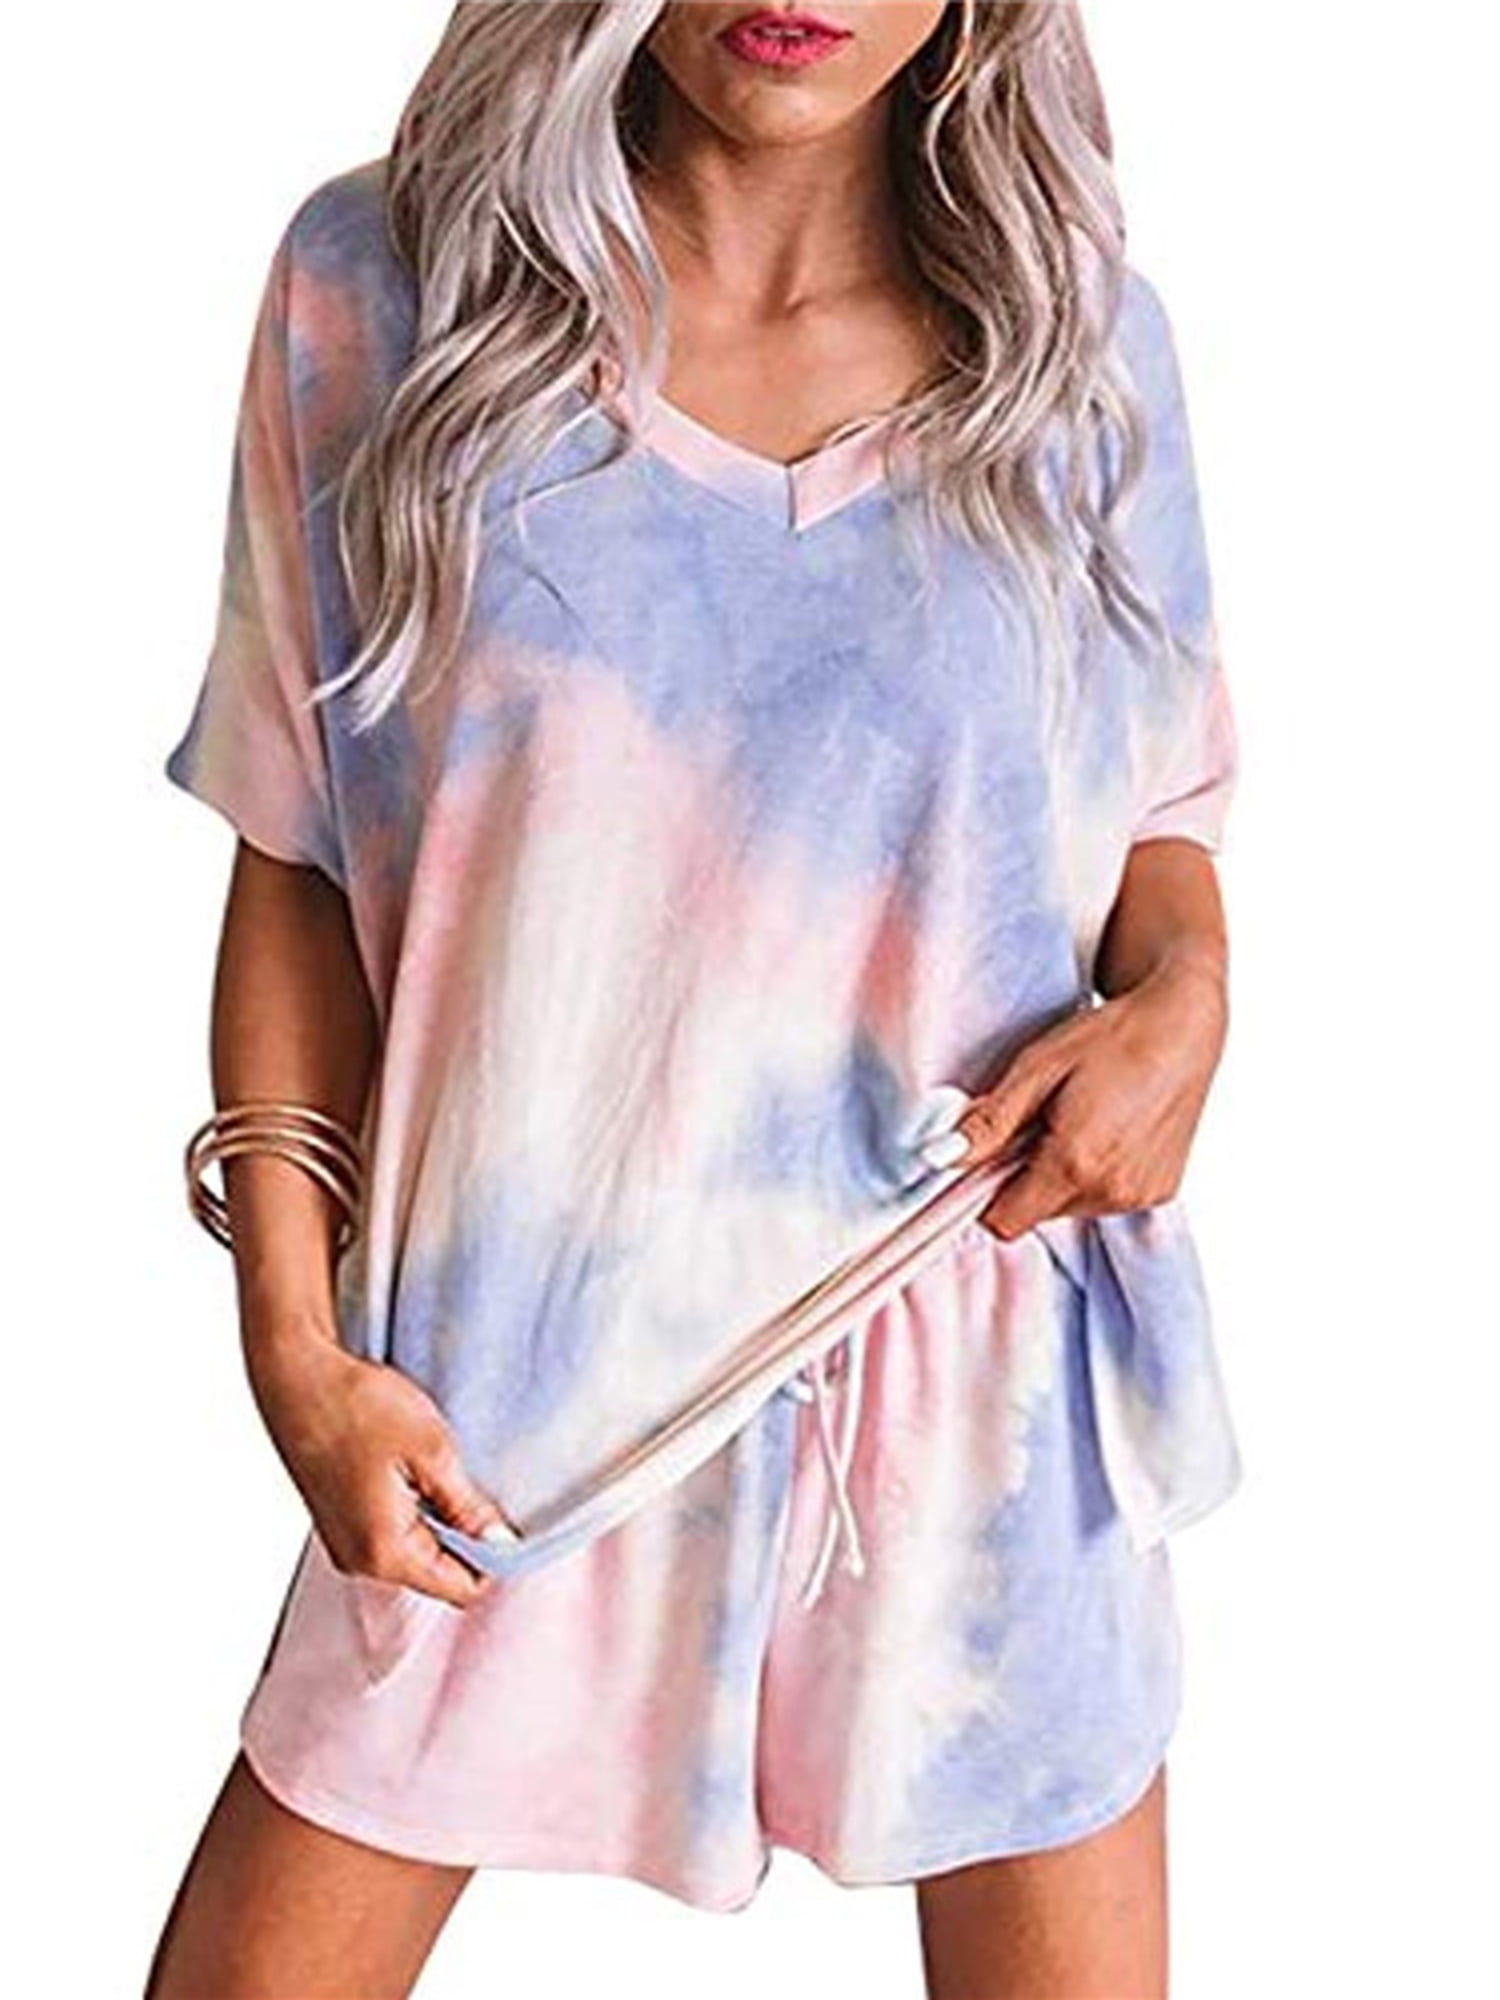 Free-Rainbow Womens Sheer Mesh Short Sleeve Crop Tops Casual T Shirt Short Sleepwear Underwear Nightwear 